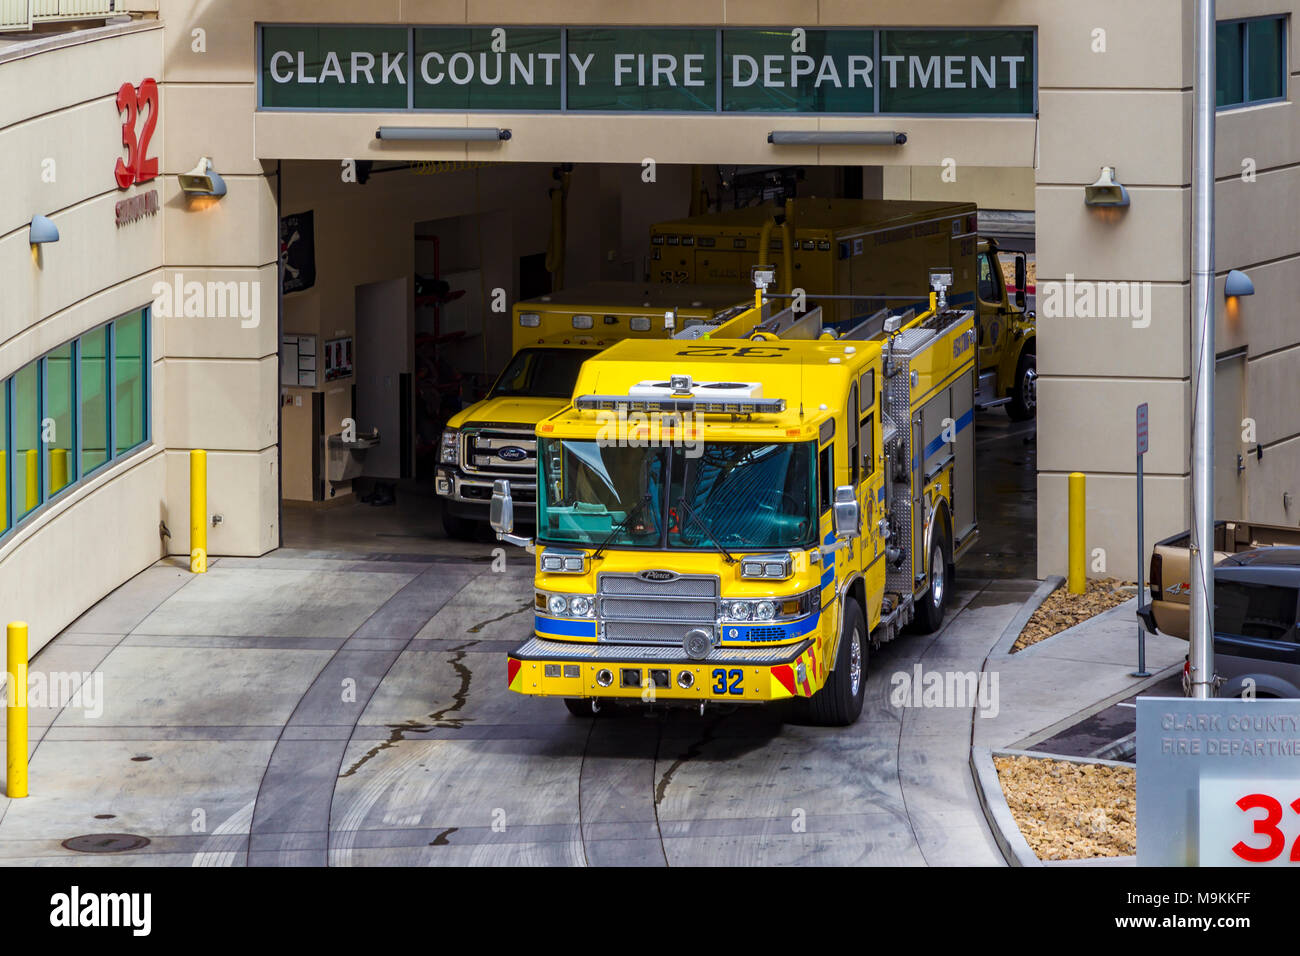 Clark County Fire Department, Las Vegas, Navarda, U.S.A. Stock Photo